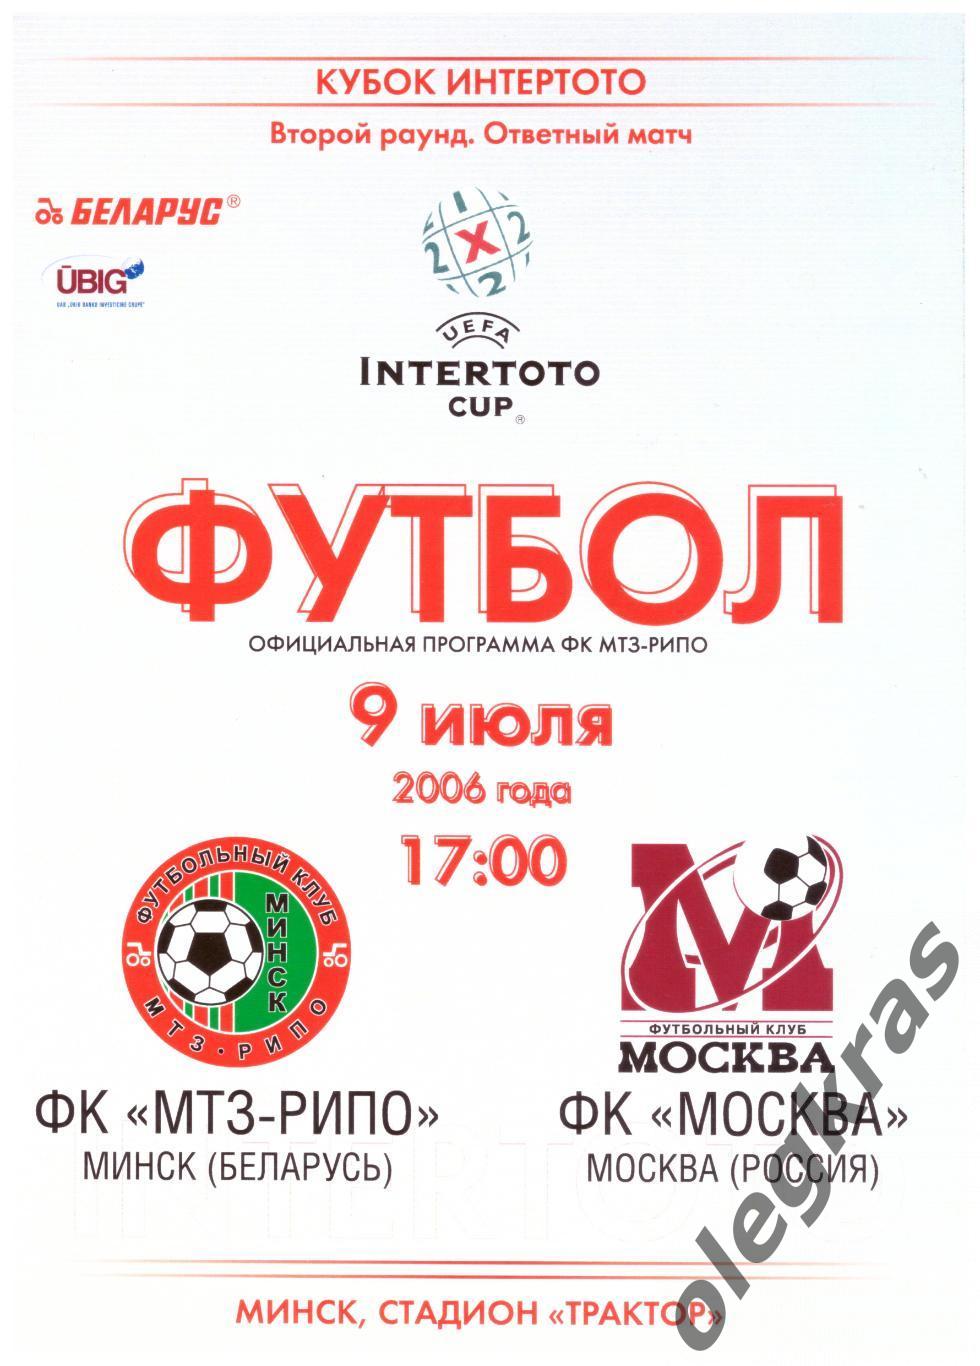 МТЗ - РИПО(Минск, Беларусь) - ФК Москва(Москва, Россия) - 9 июля 2006 года.